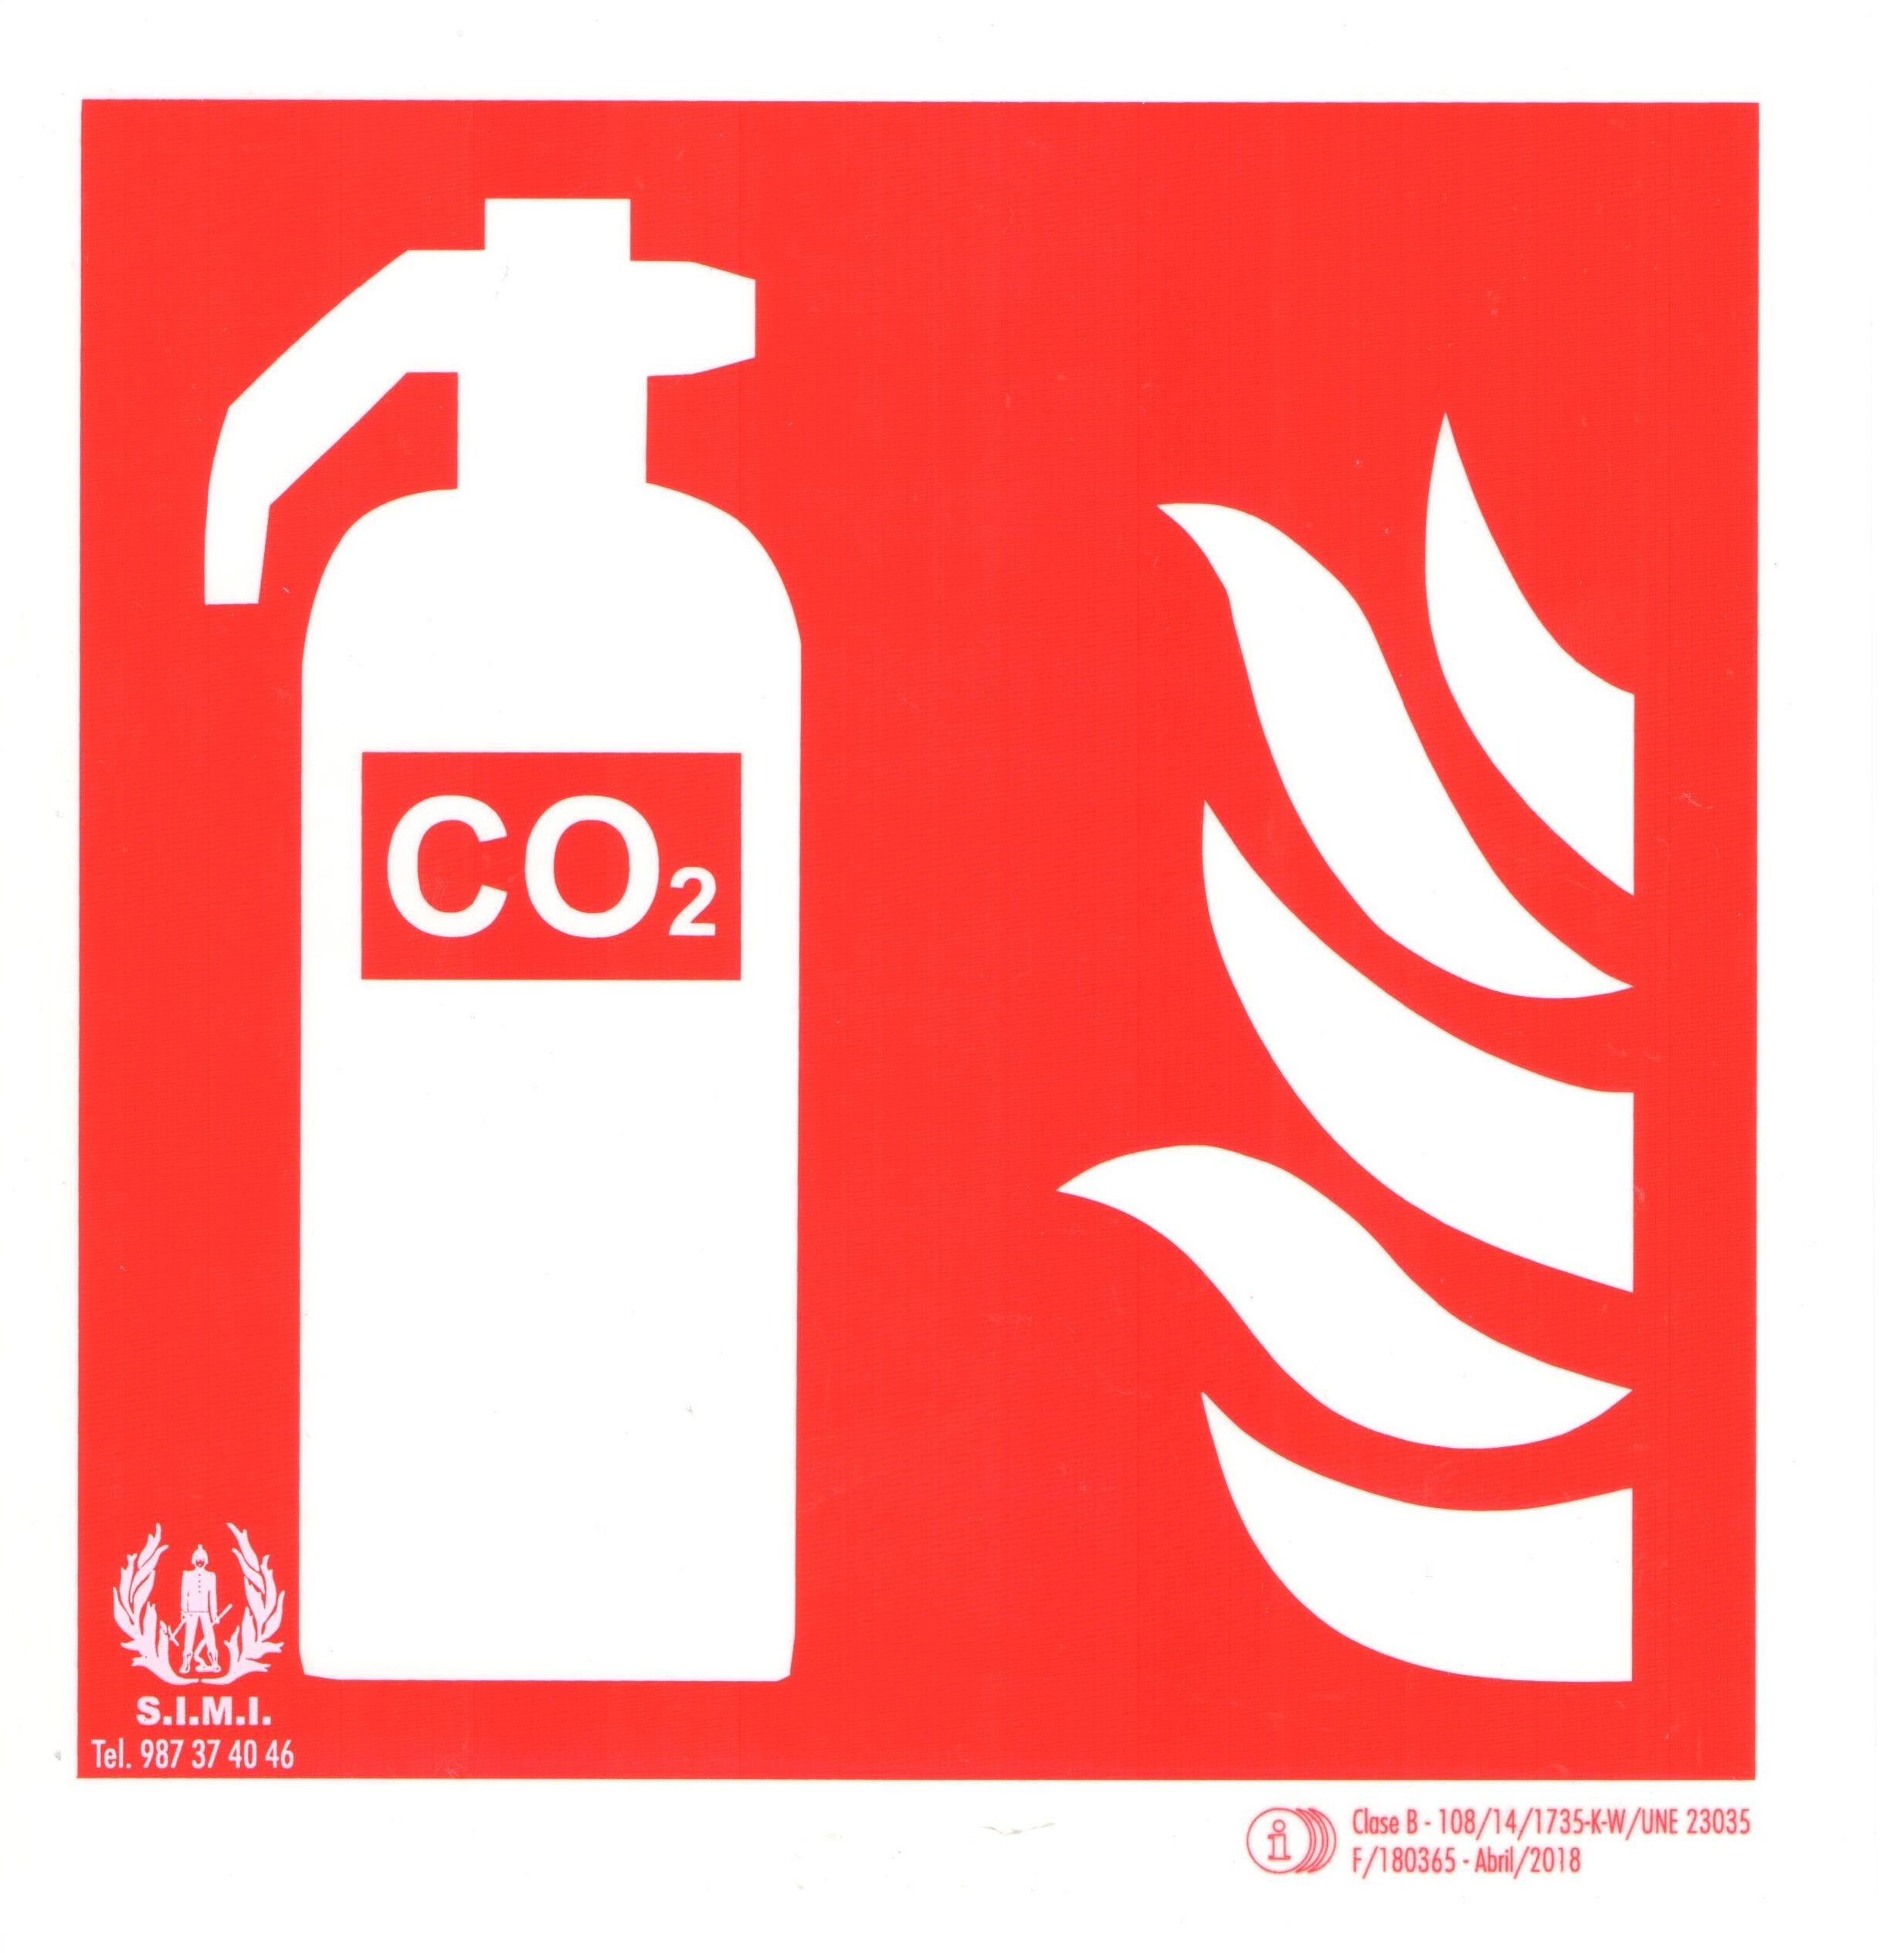 Extintores de CO2 — Mundo extintor